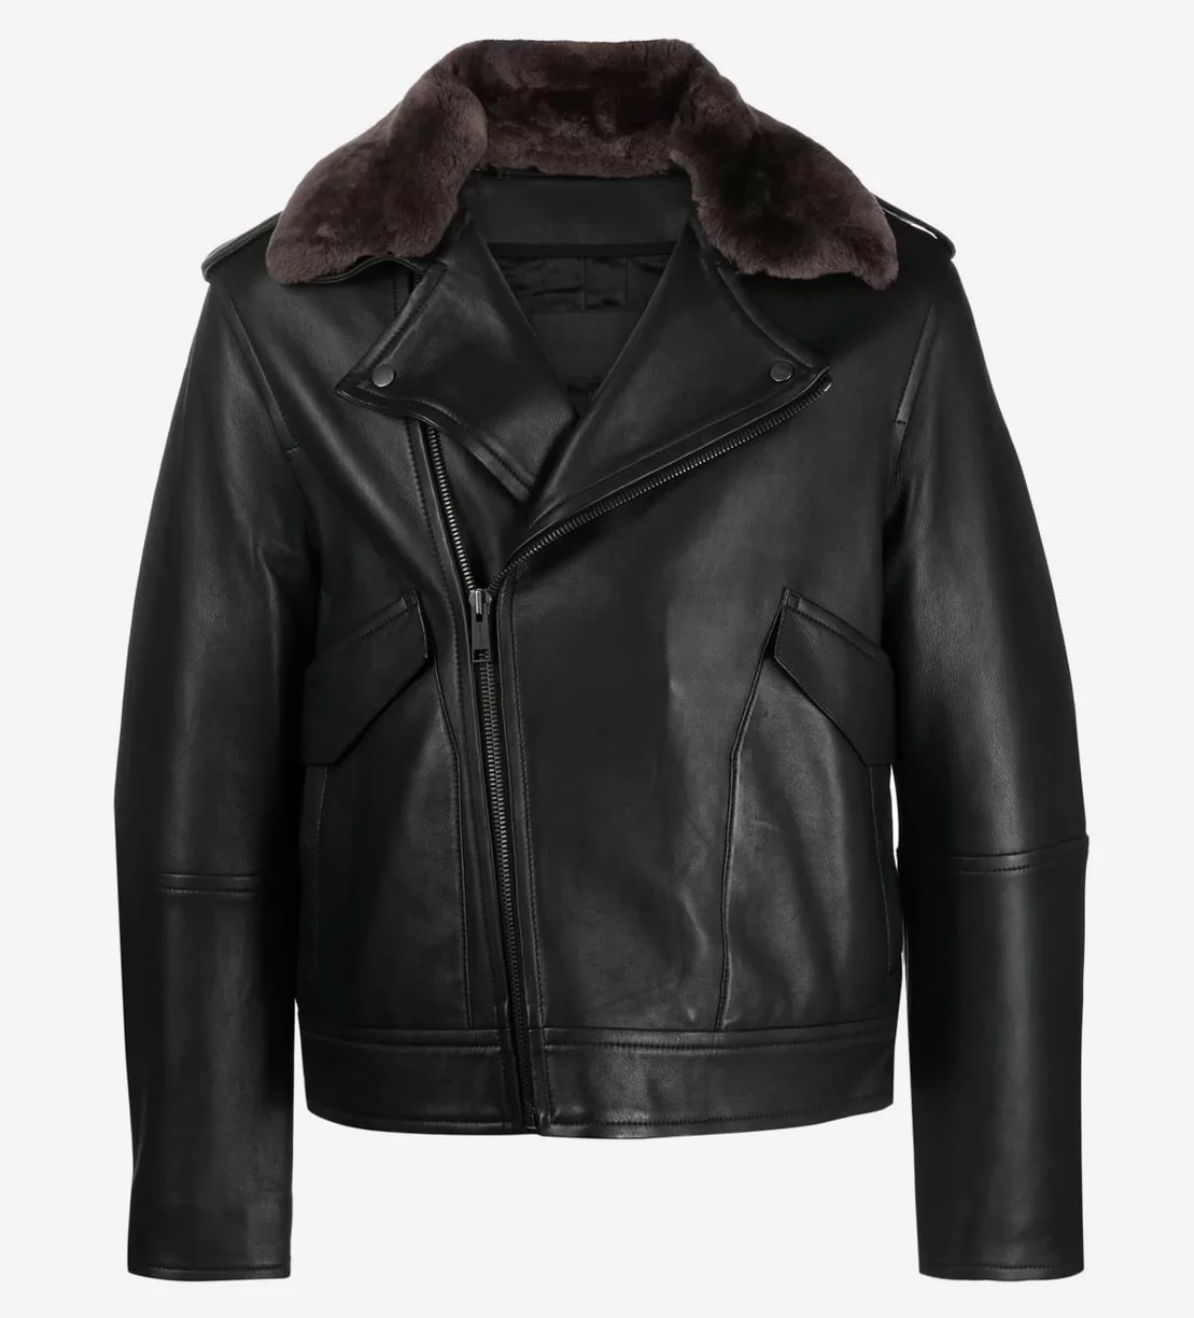 MEN's EXCLUSIVE Black Fur collar Leather Jacket's